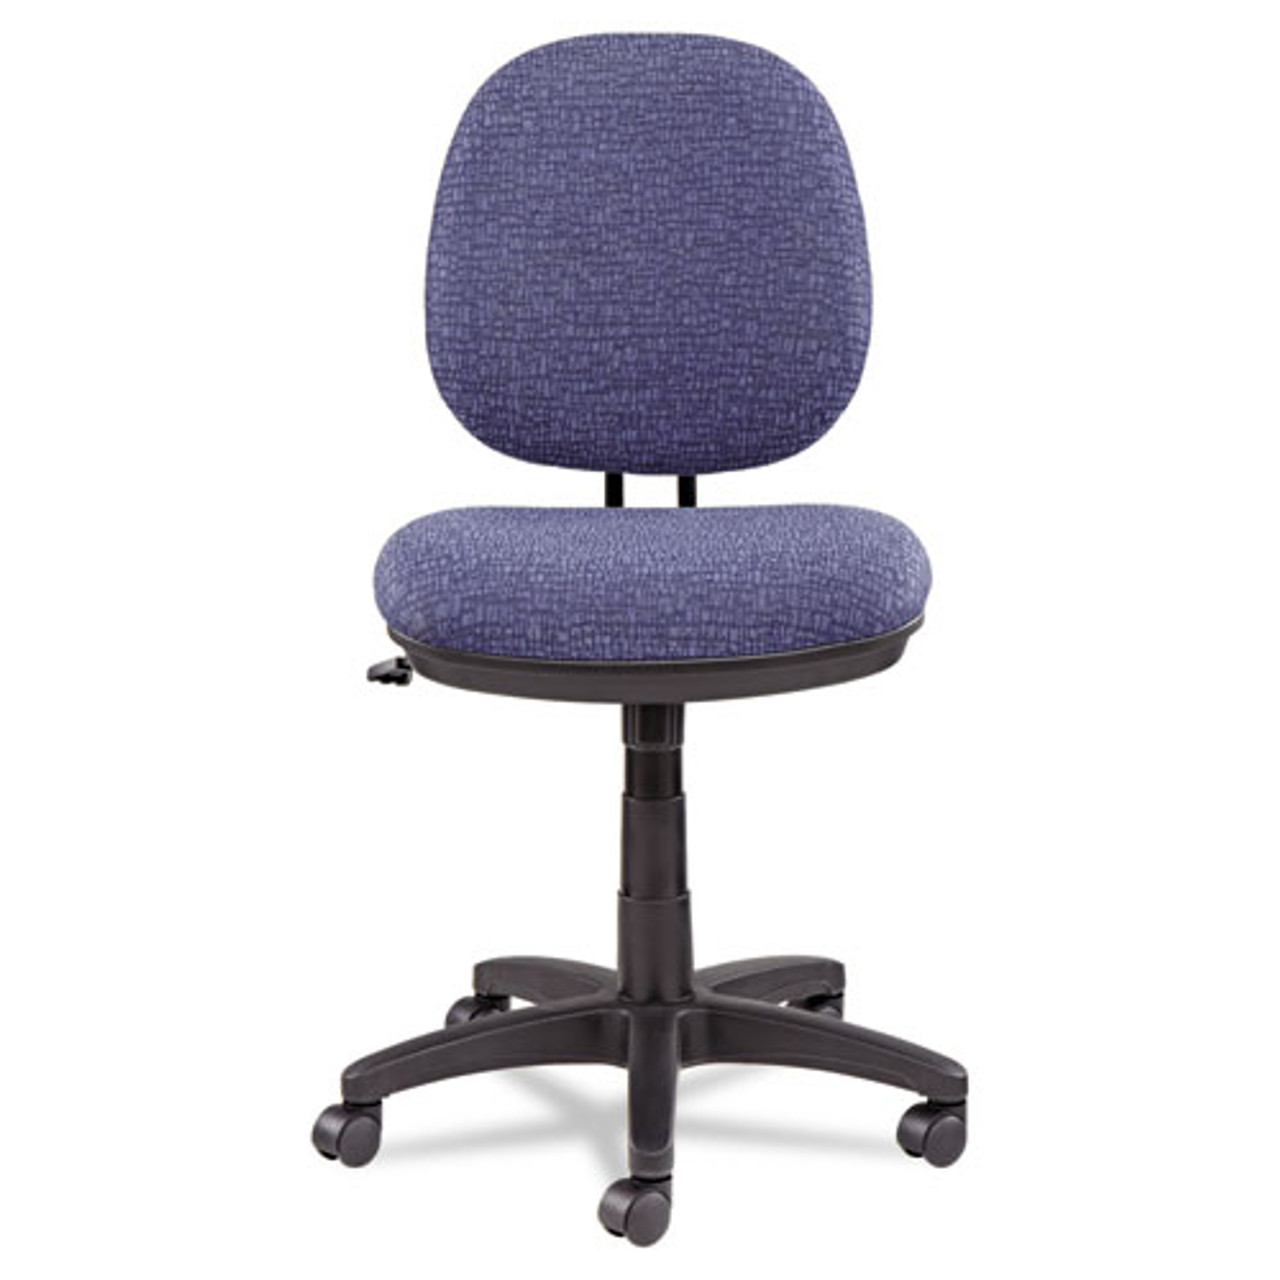 Alera Interval Swivel/tilt Task Chair, Tone-On-Tone Fabric, Marine Blue, #AL-1136